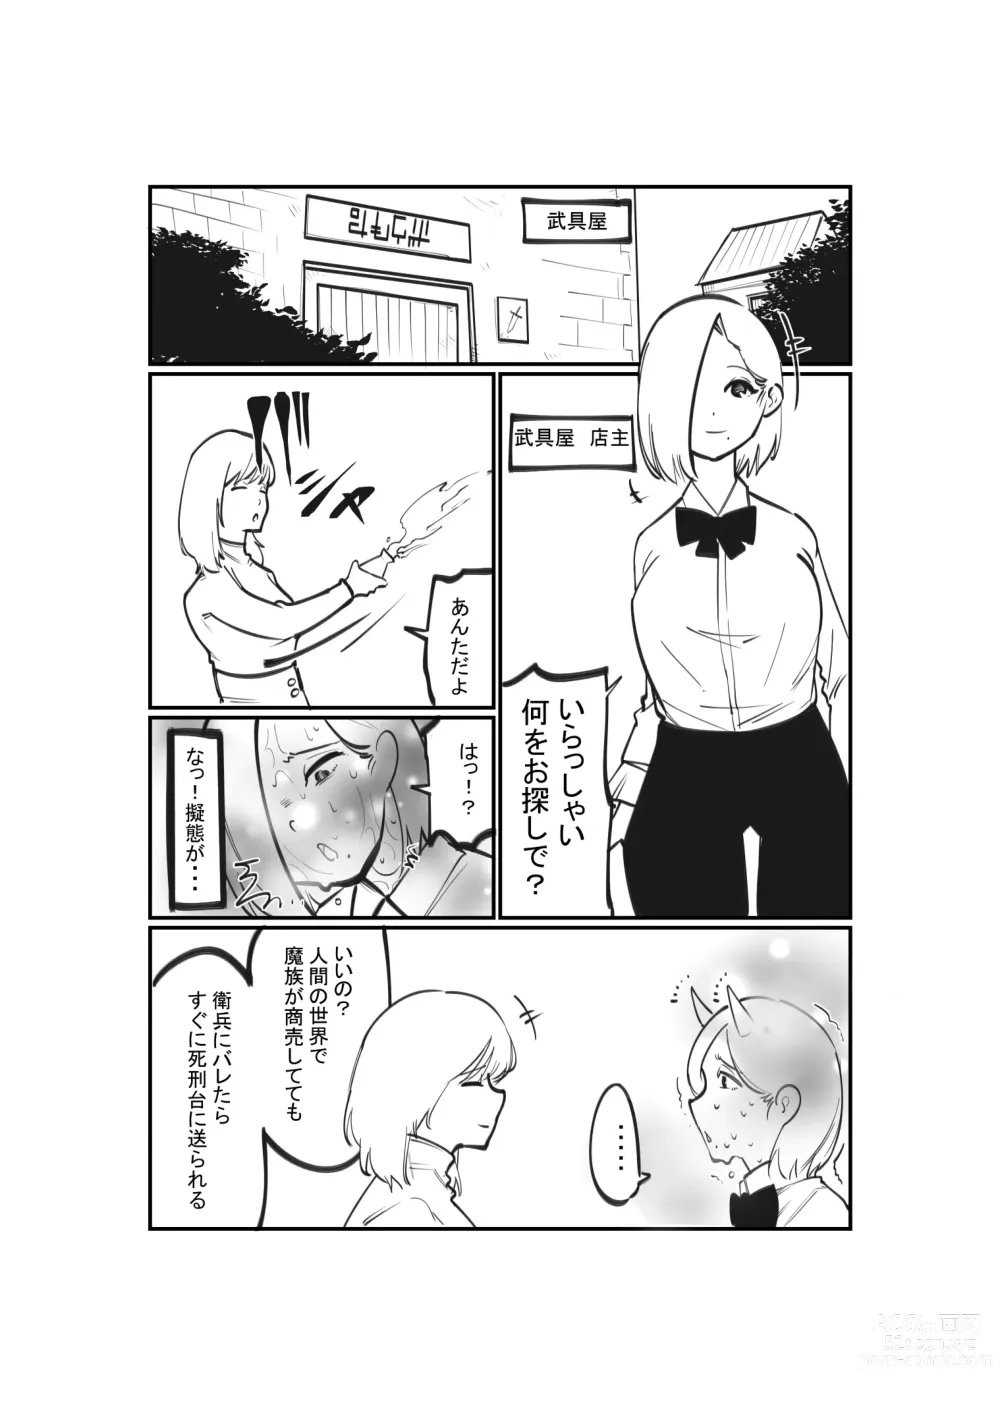 Page 2 of doujinshi Dorei Shounin no Cli Ikusei